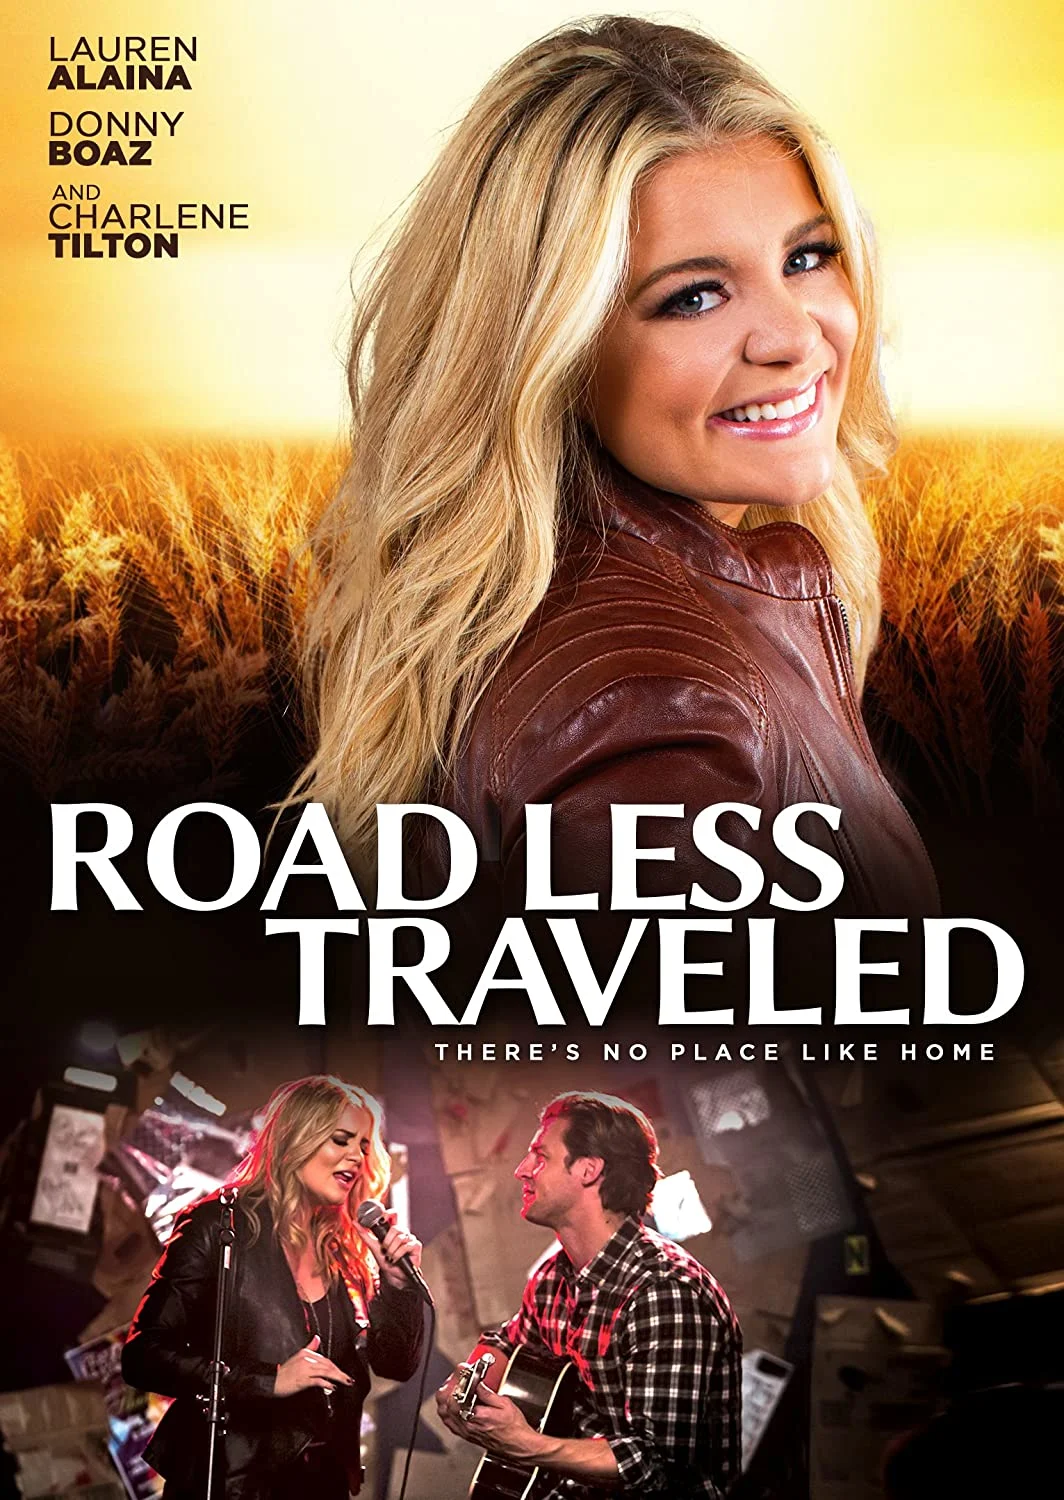 Road Less Traveled (DVD) on MovieShack